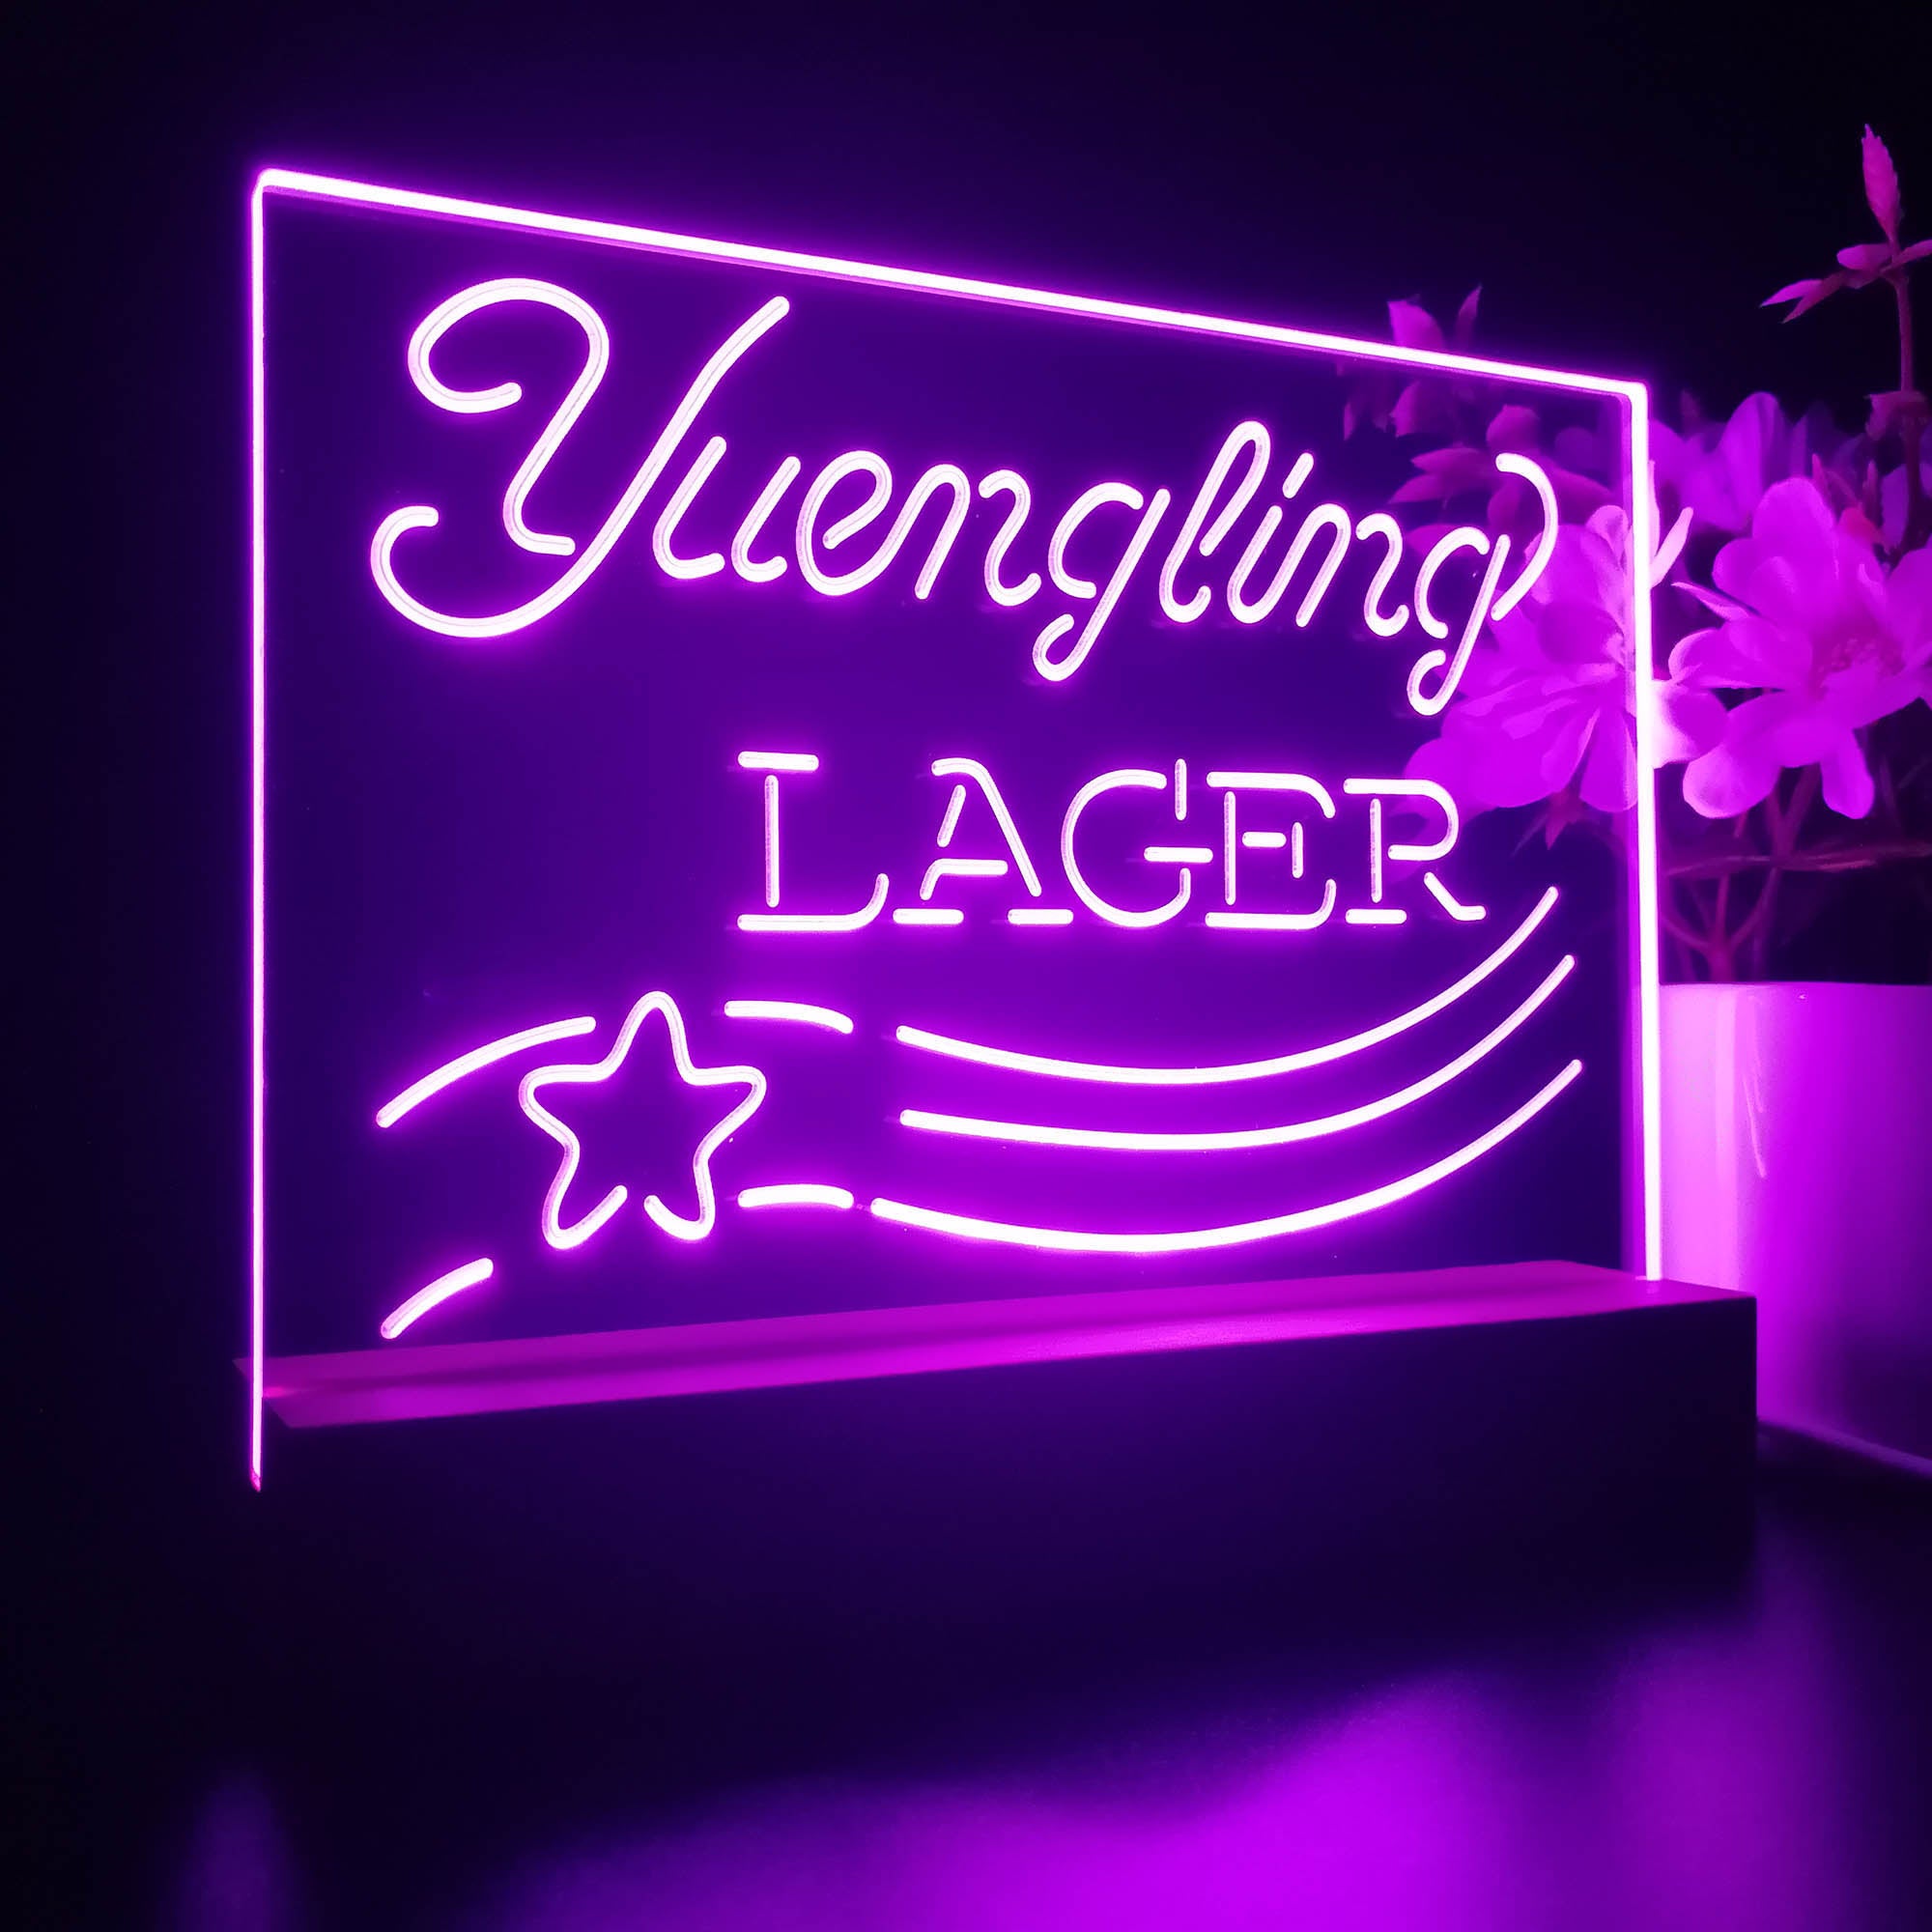 Yuengling Beer Larger Bar Night Light LED Sign